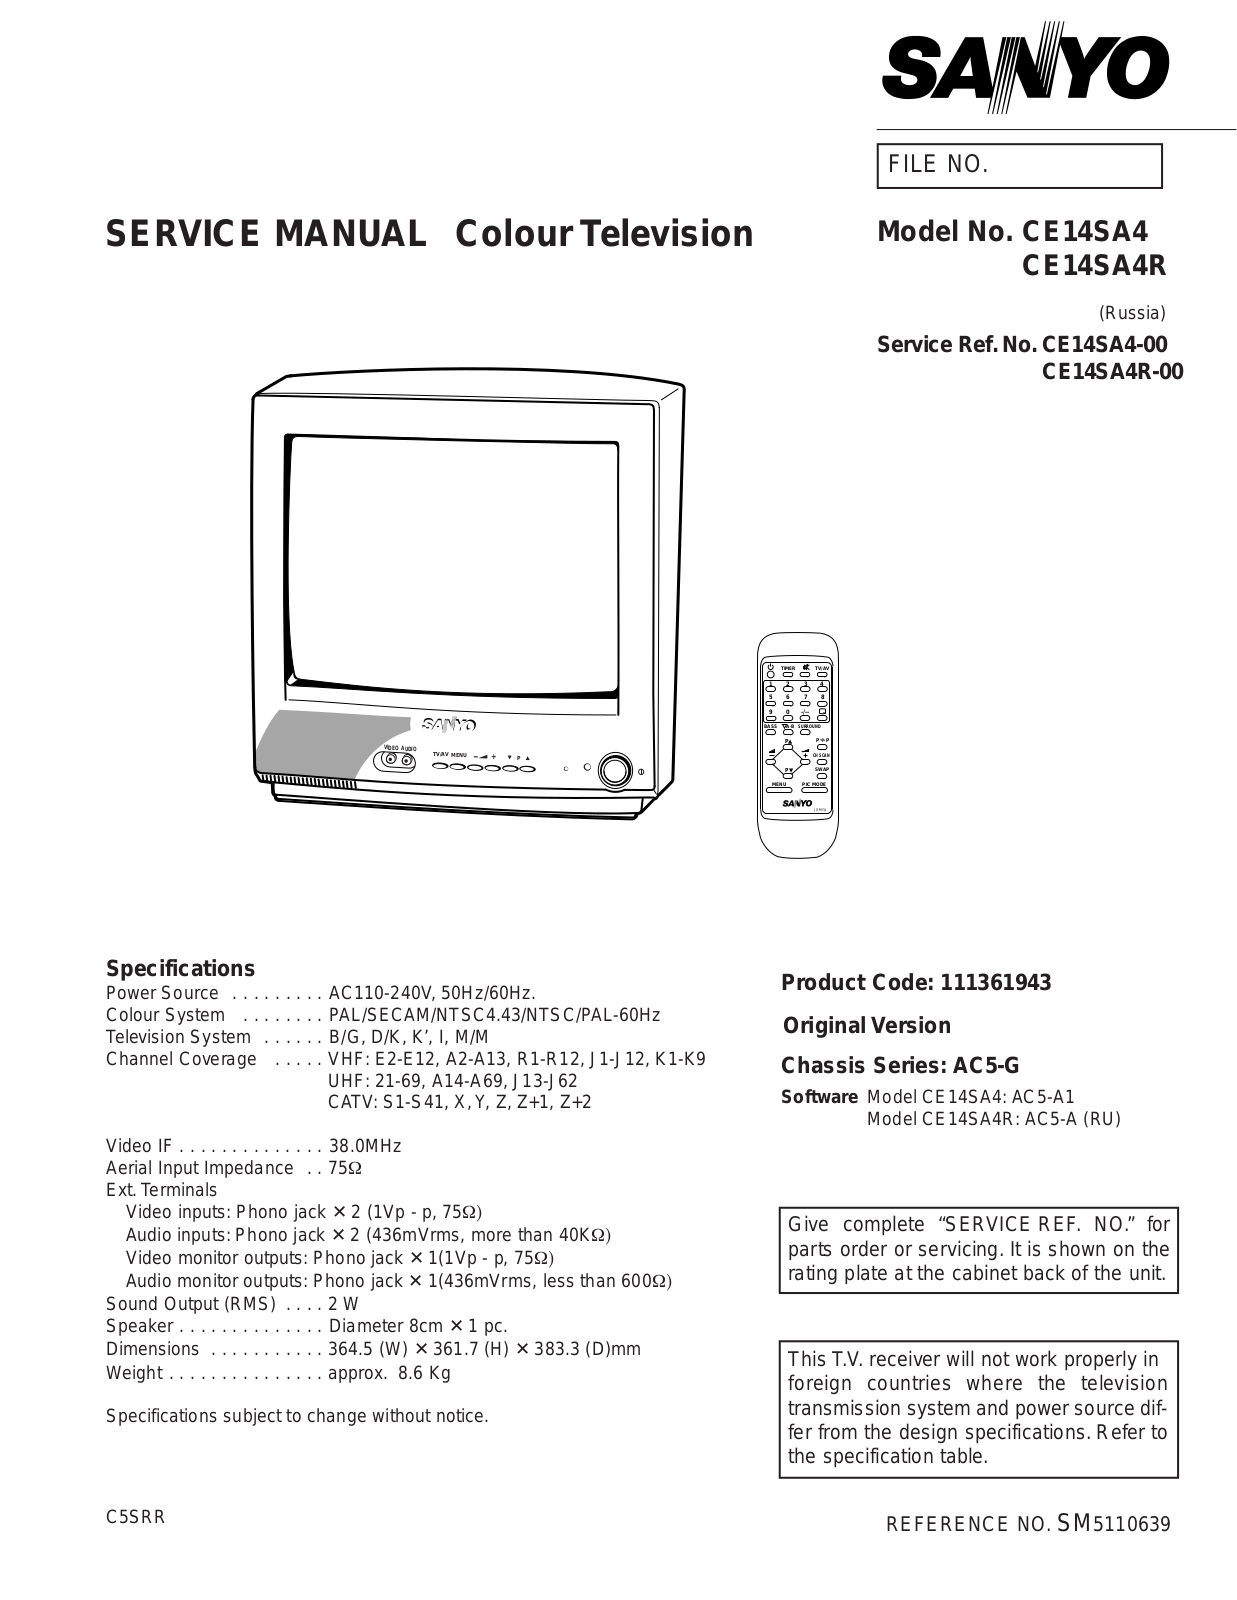 Sanyo CE14SA4R Service manual